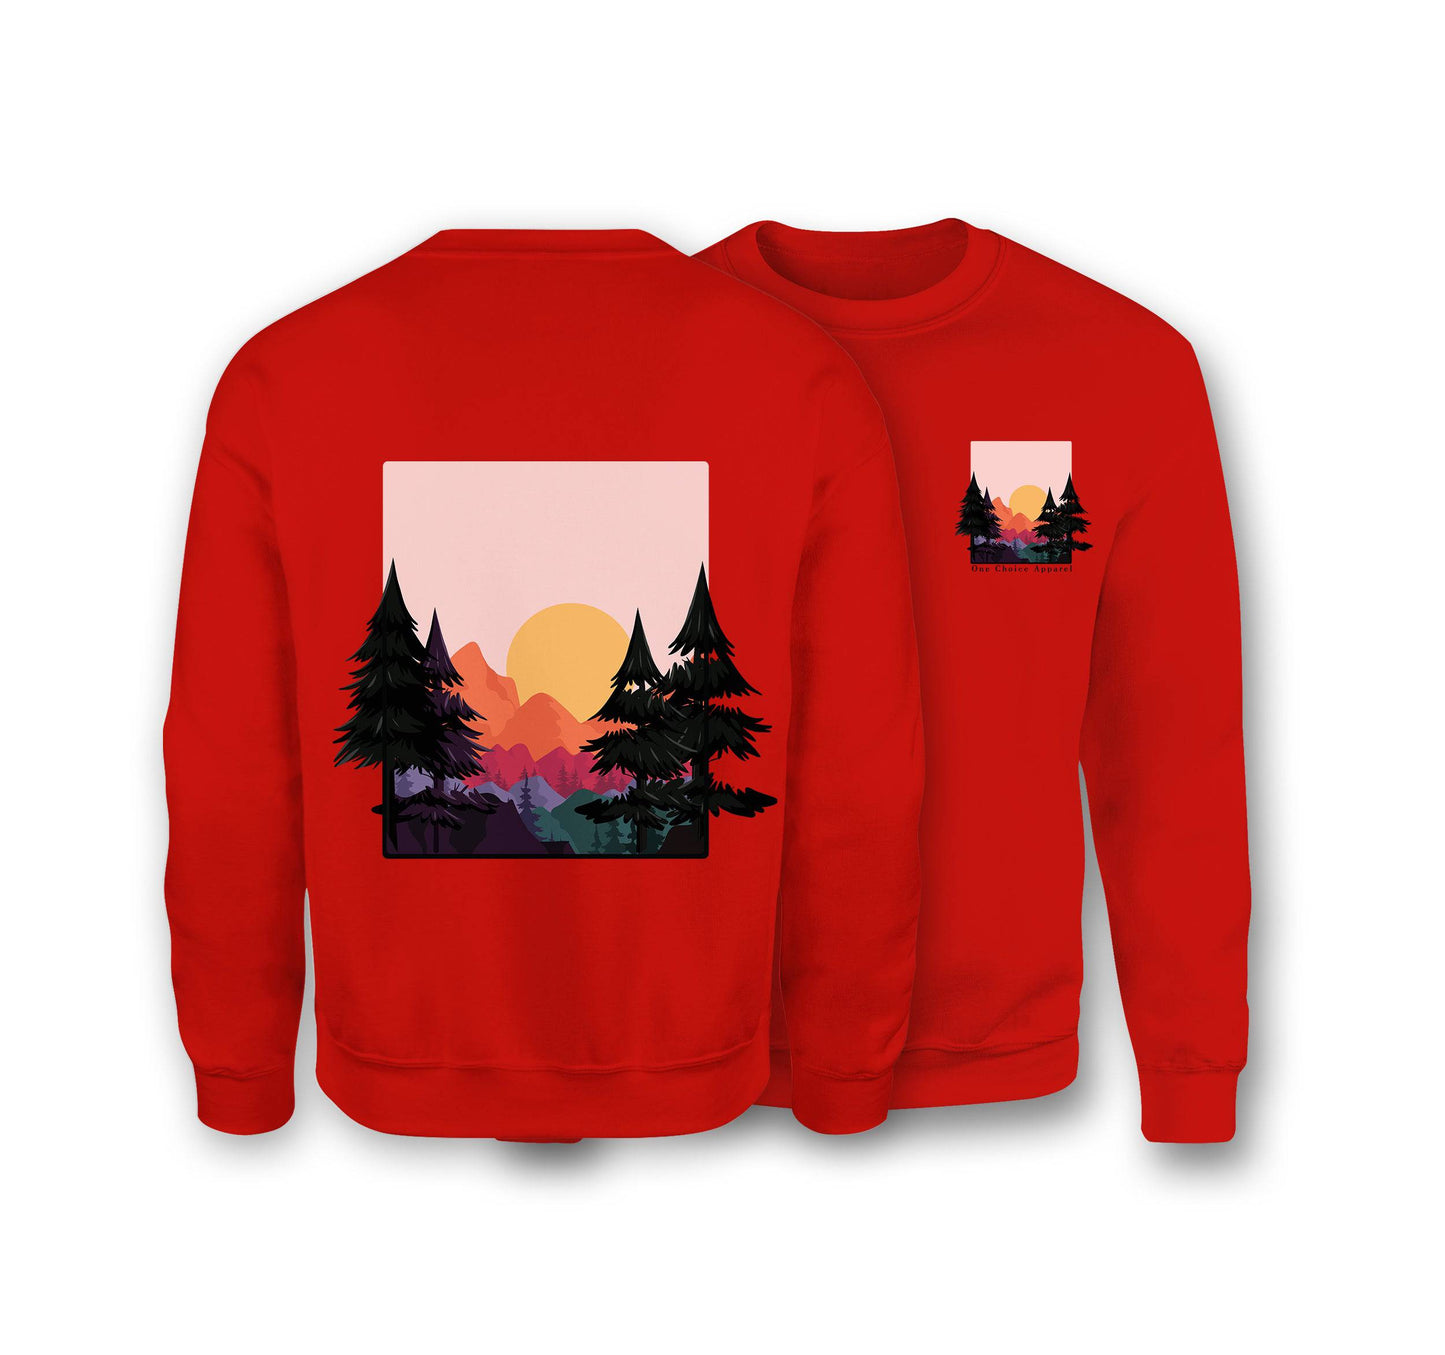 Sun & Mountains Sweatshirt - Organic Cotton Sweatshirt - One Choice Apparel